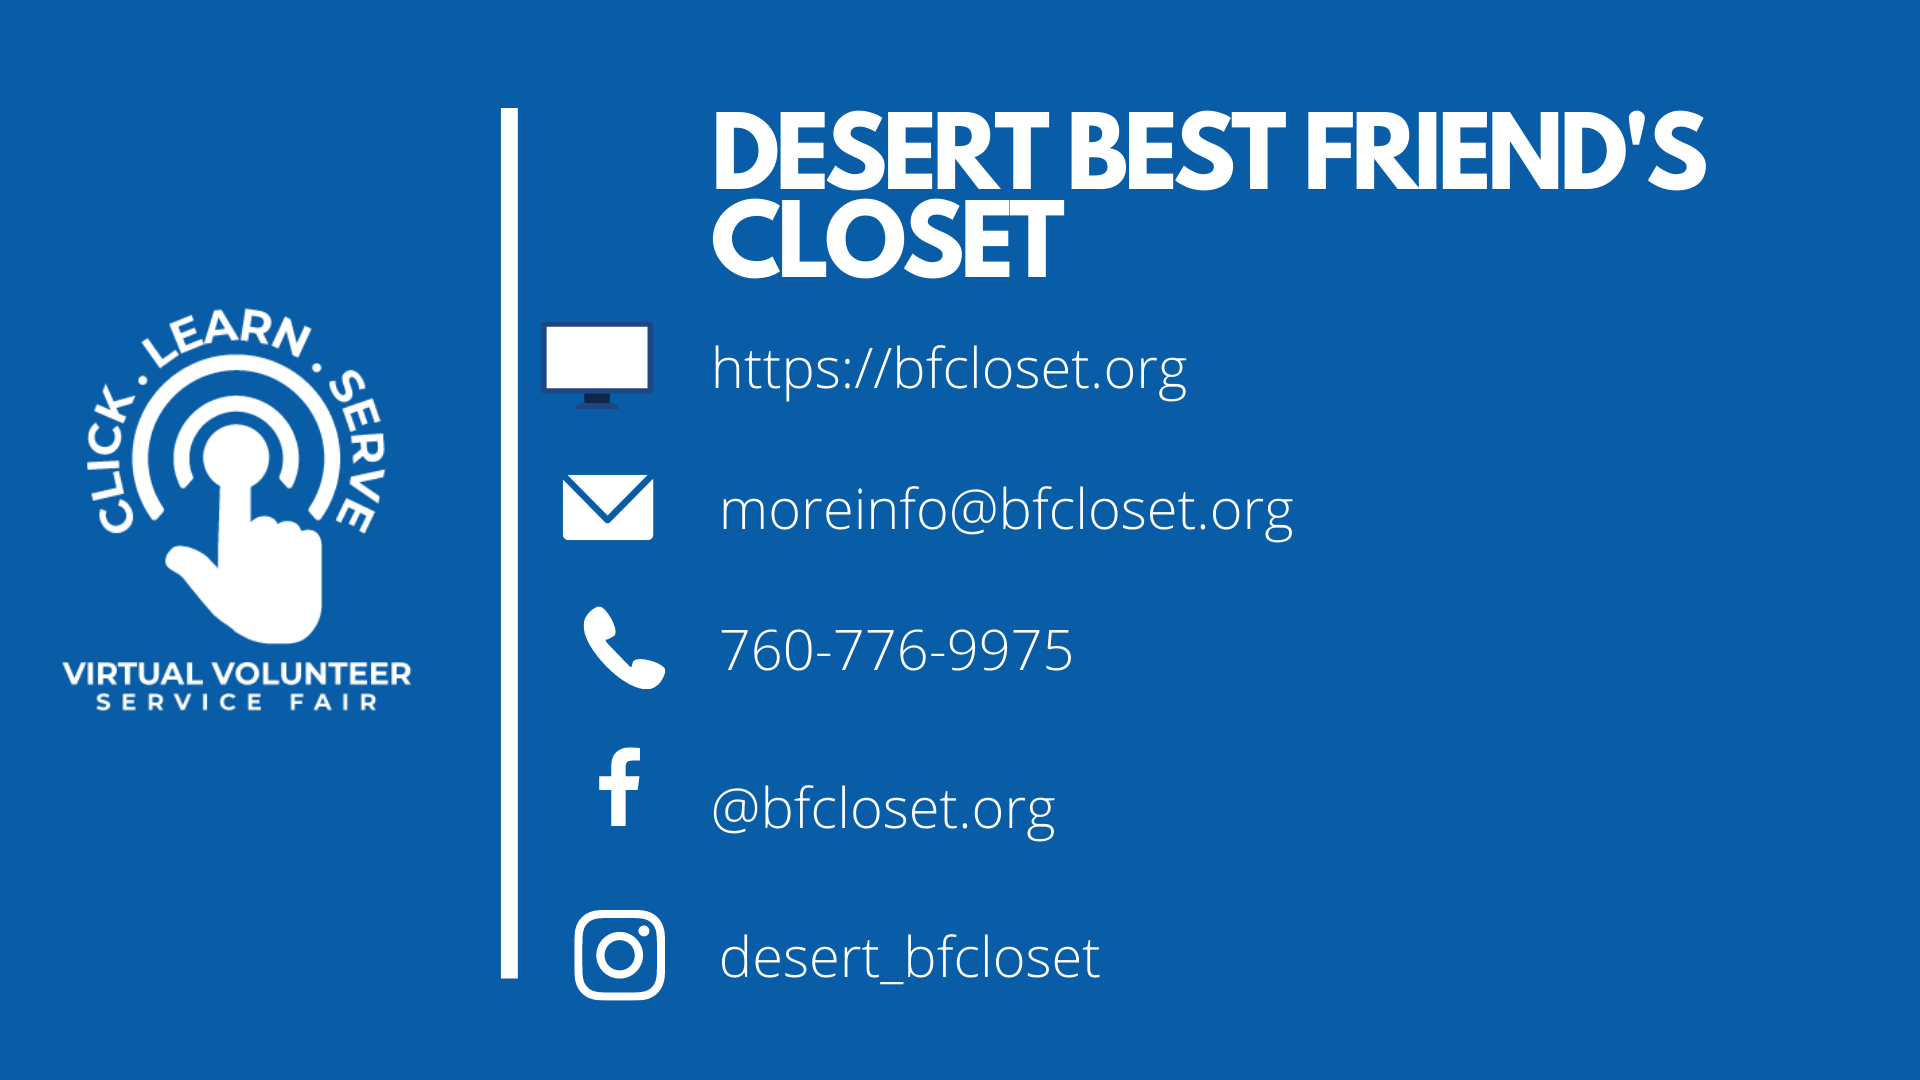 Desert Best Friend's Closet nonprofit video for Virtual Volunteer Fair.